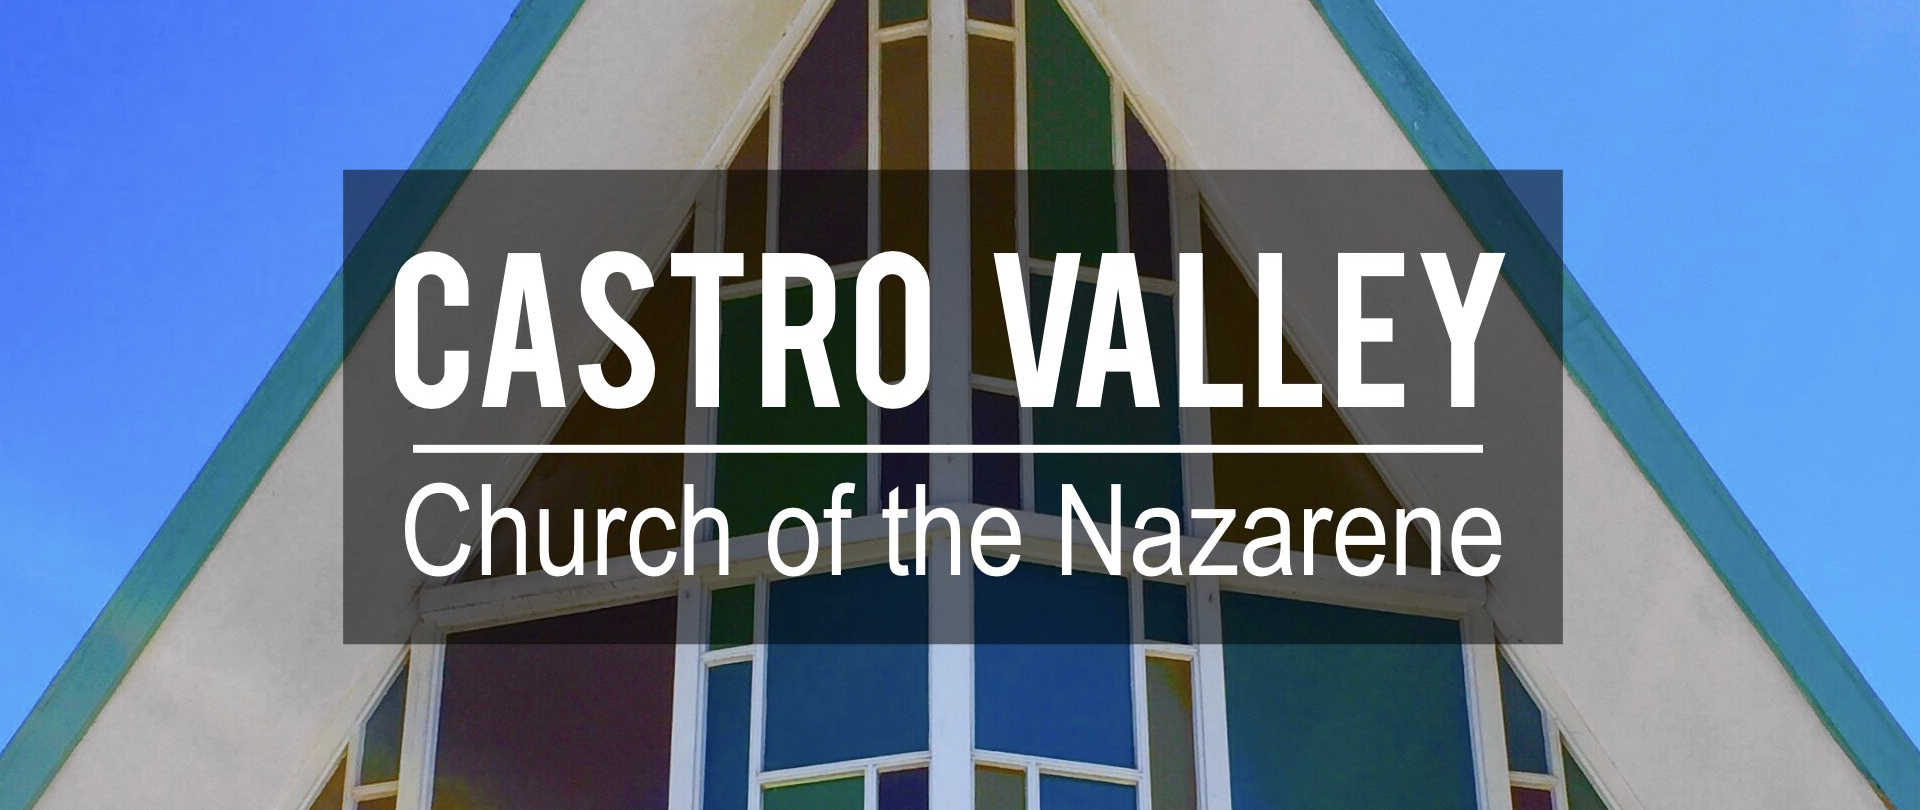 Castro Valley Church of the Nazarene